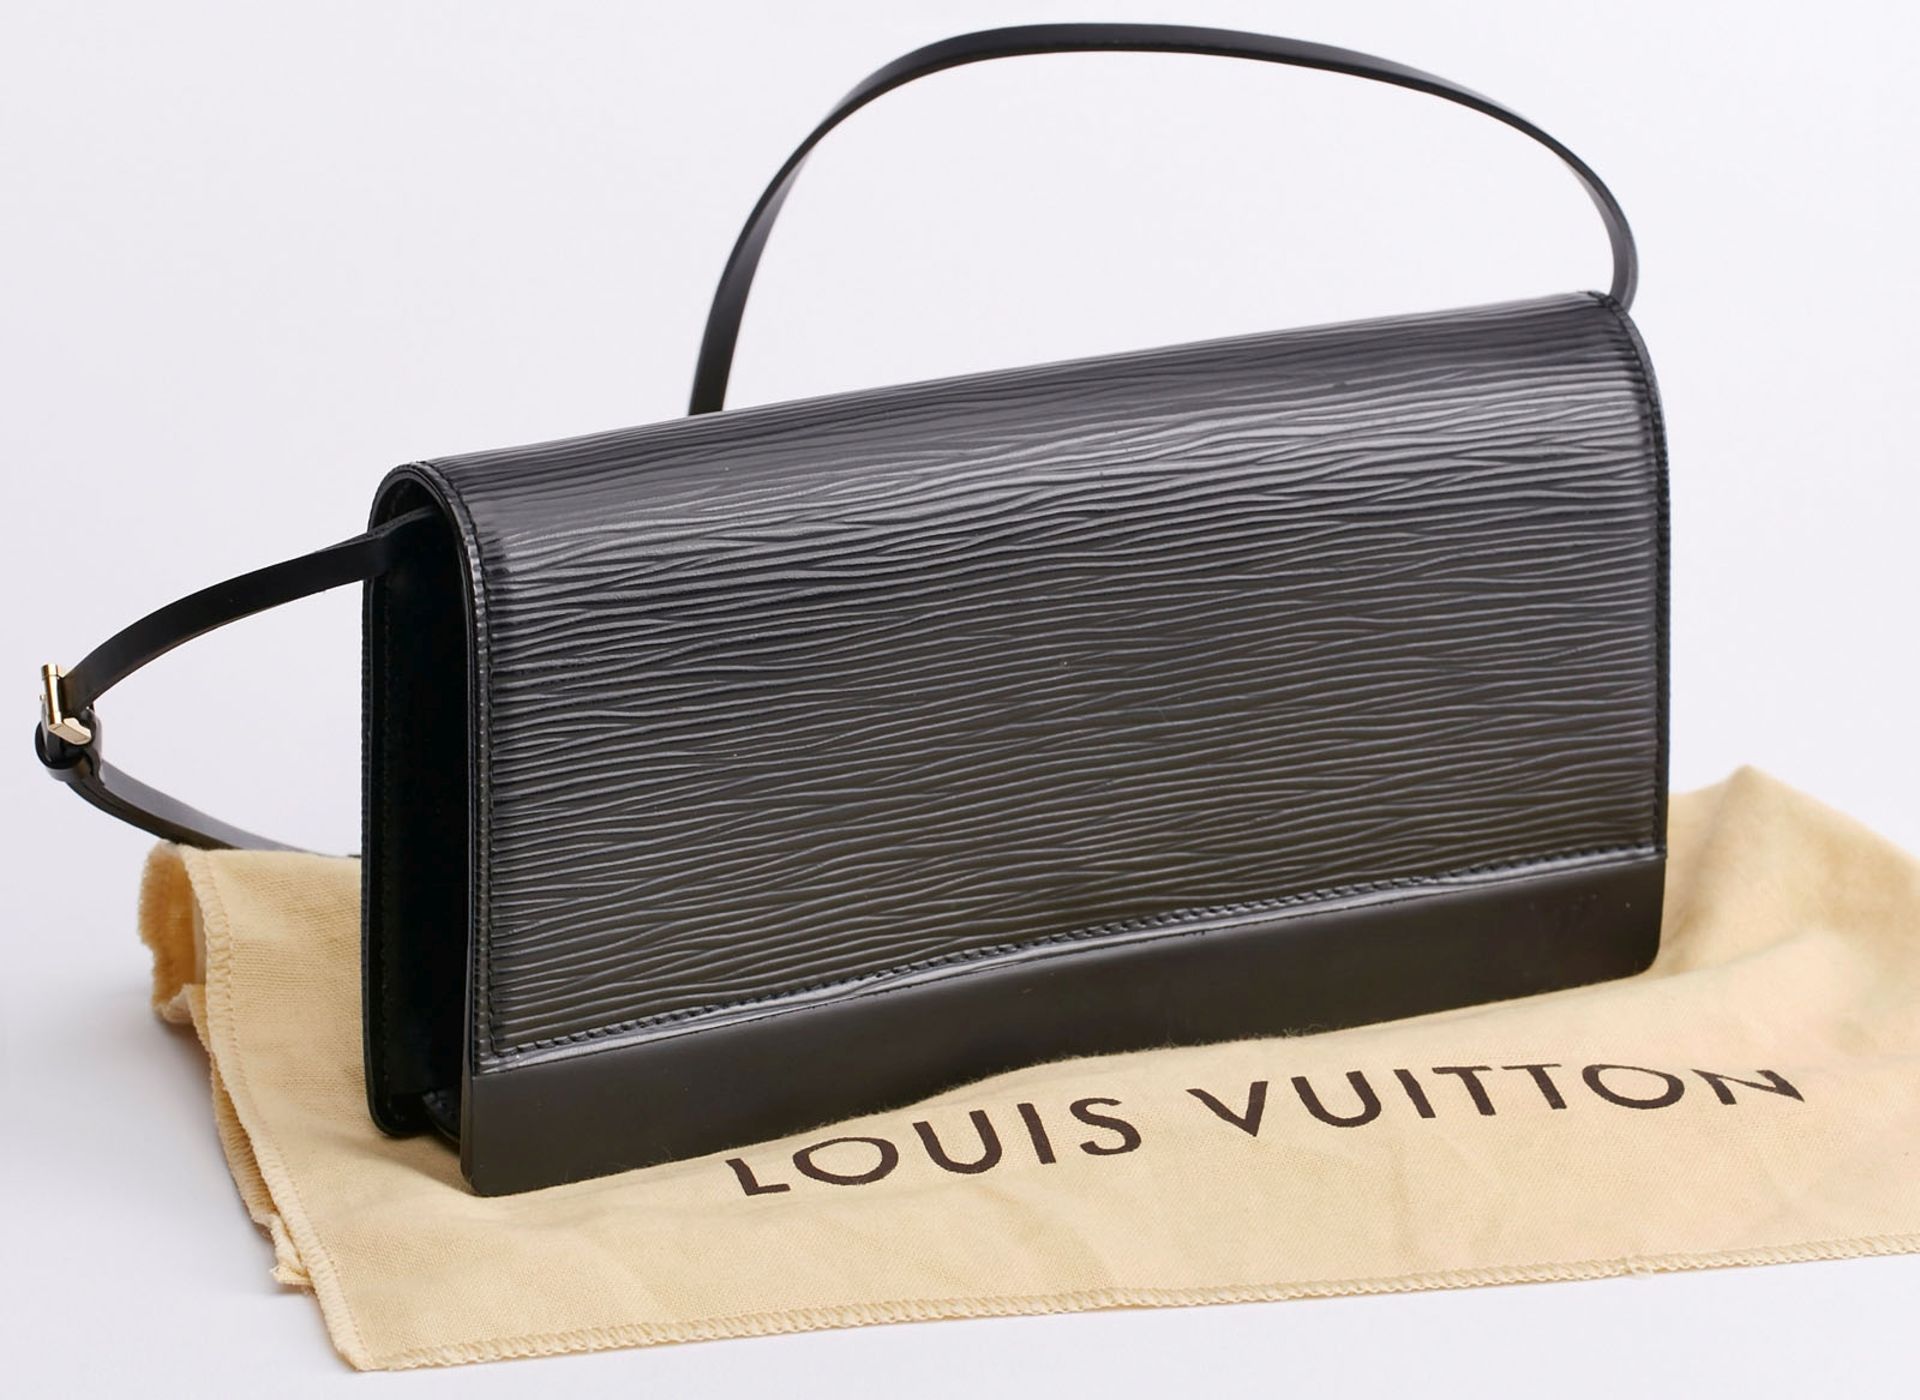 Clutch/ kl. Abendhandtasche, Louis Vuitton Ende 20. Jh. - Image 2 of 2